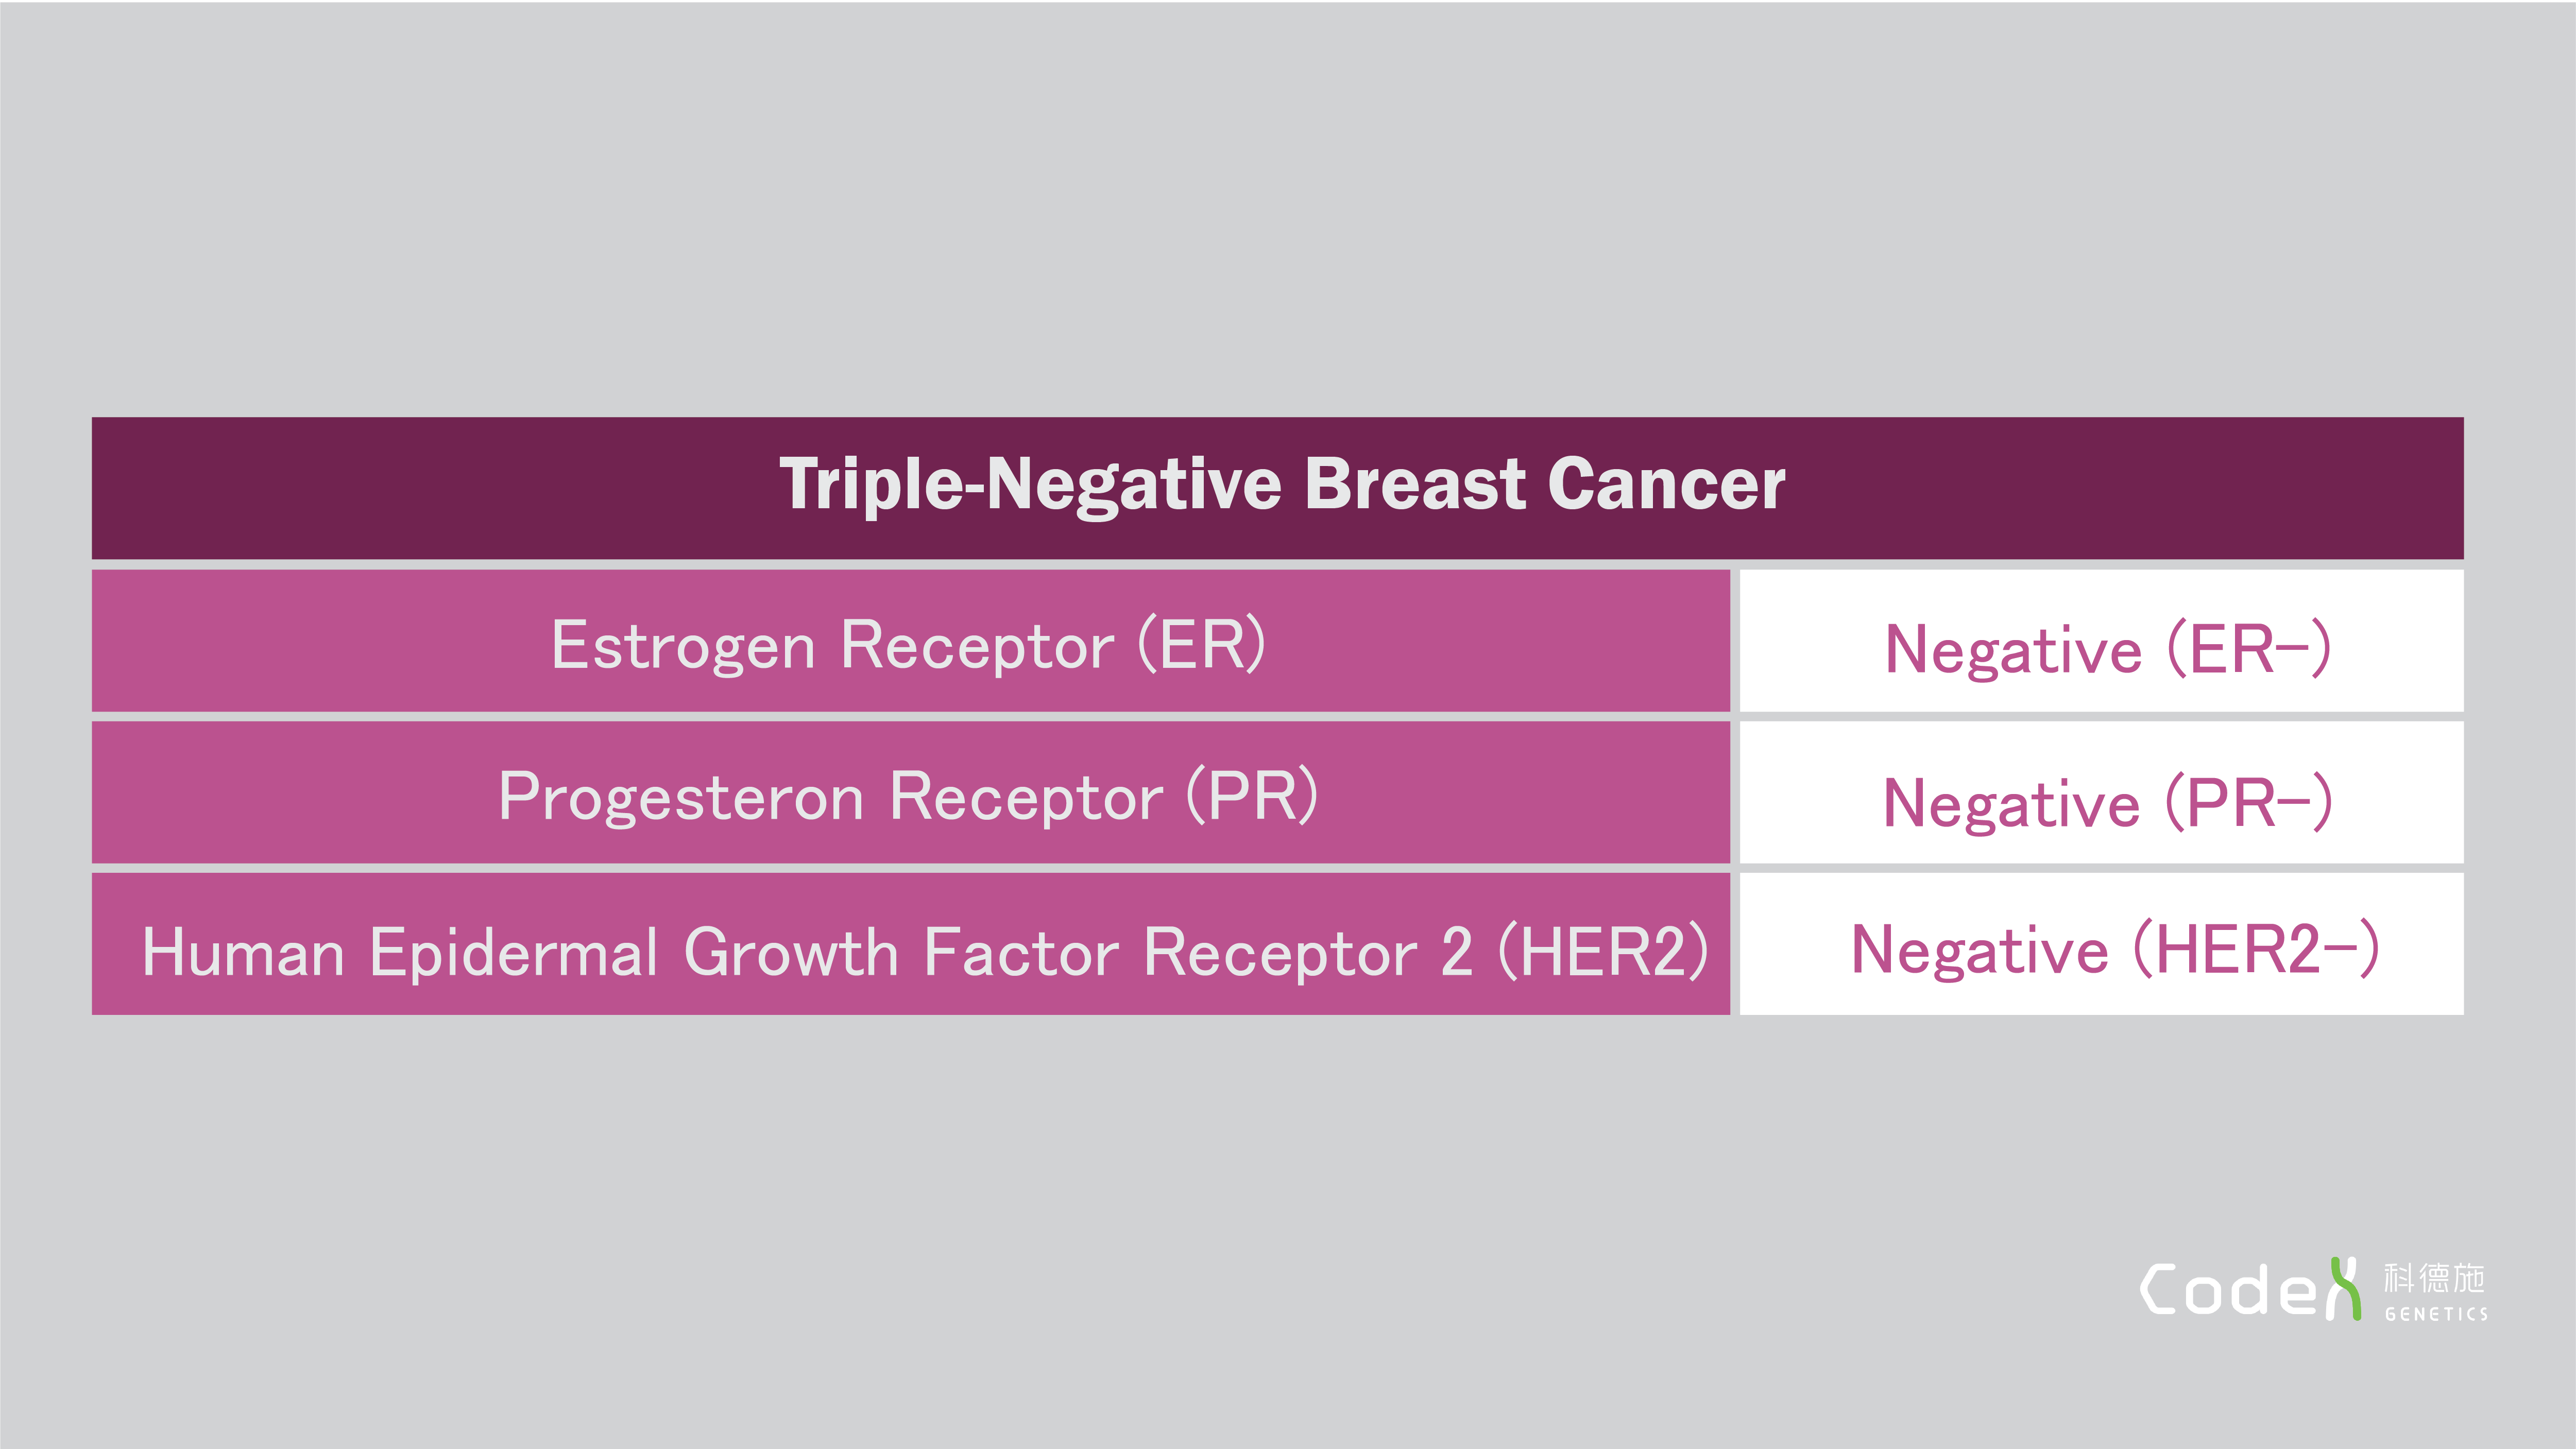 Triple-negative breast cancer